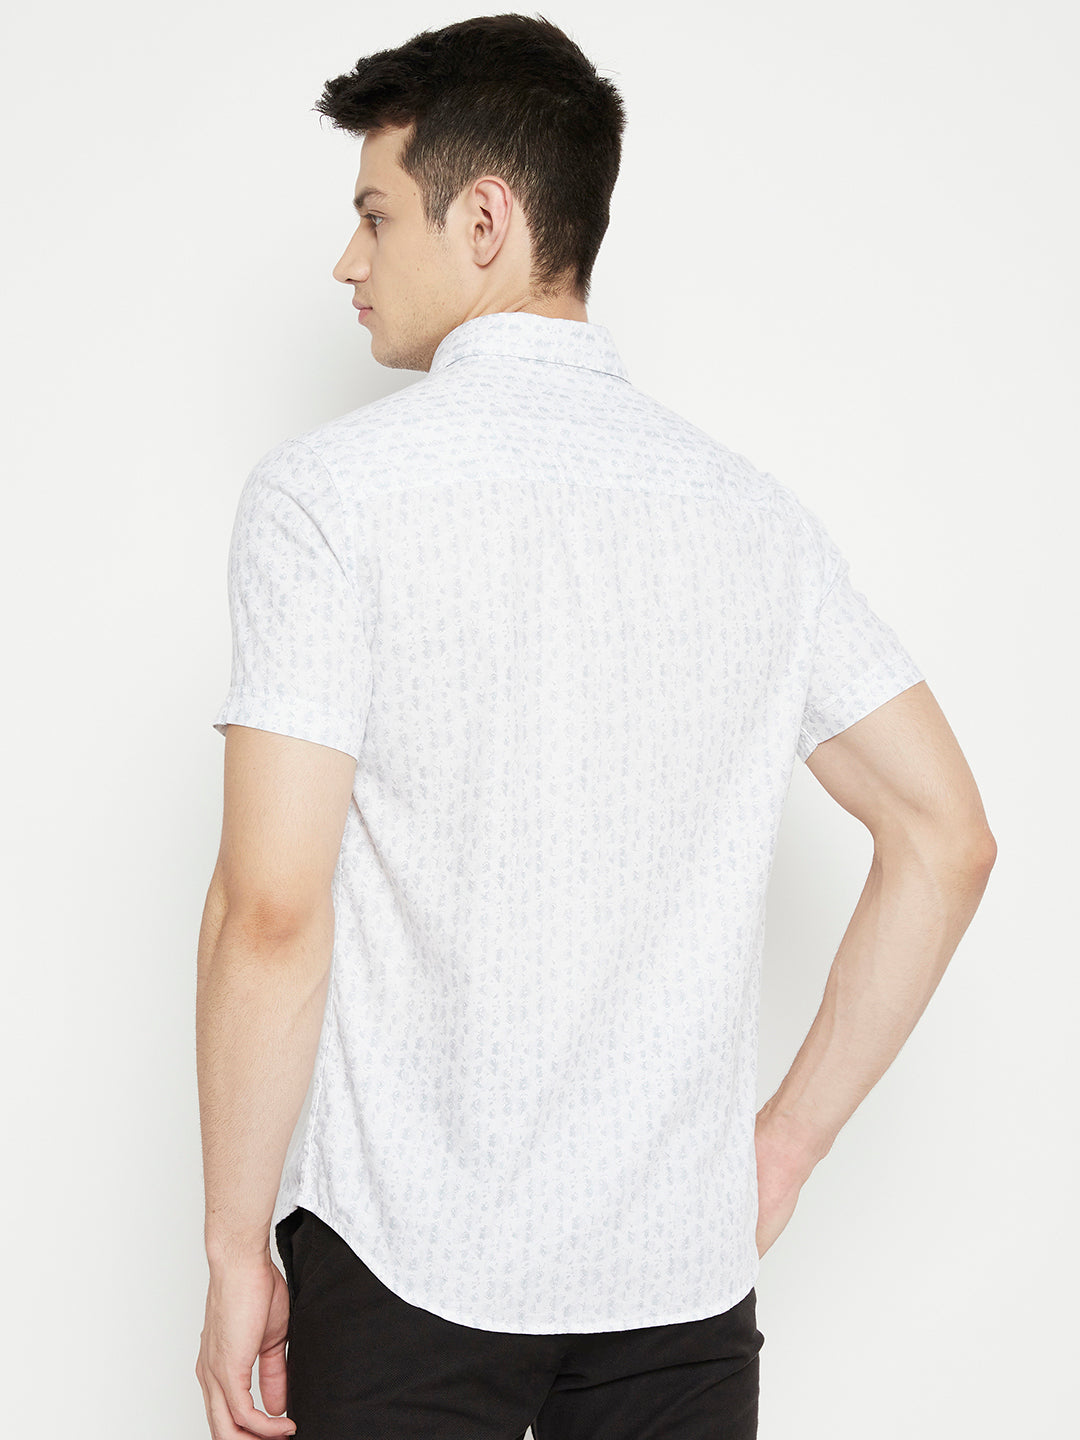 White Printed Slim Fit shirt - Men Shirts